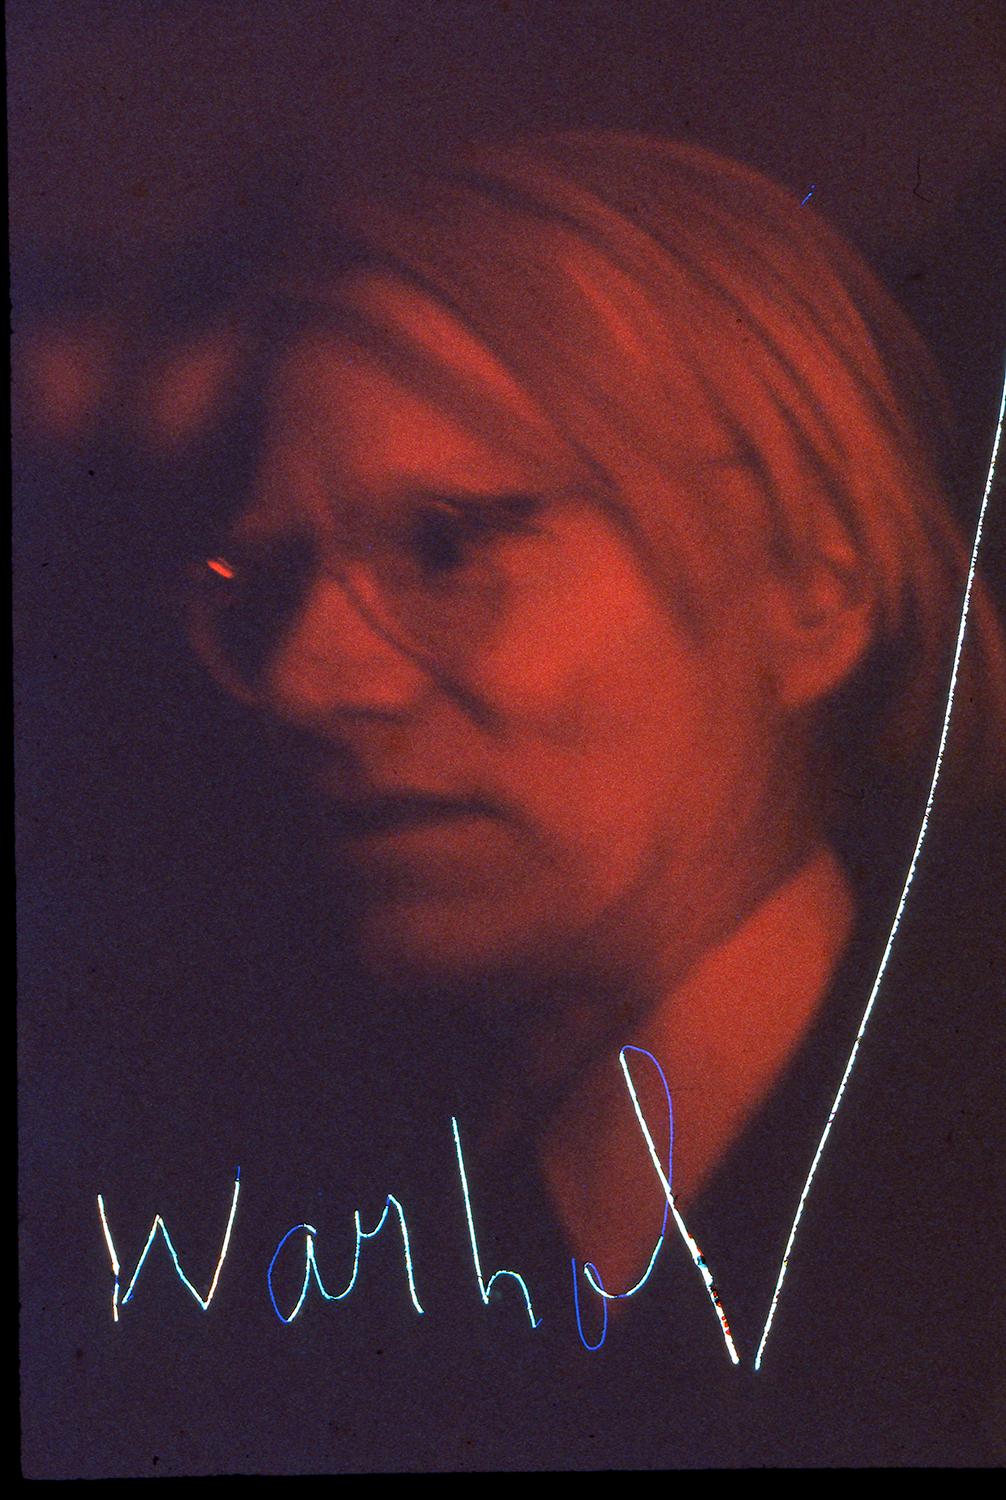 Robin Rice Color Photograph - Warhol, Opening Night Studio 54, New York, NY, 1977